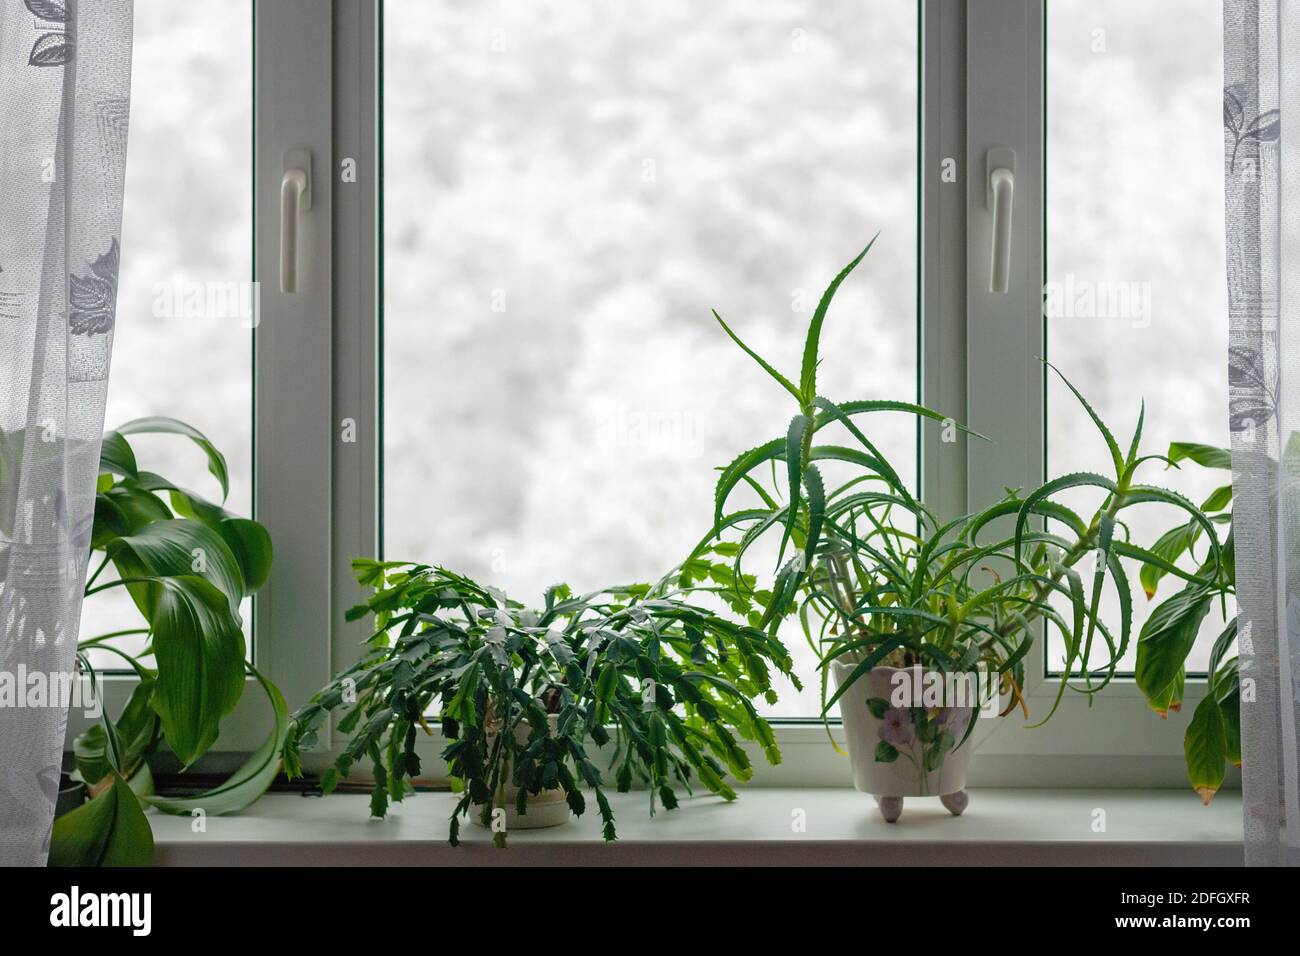 Houseplants growing on windowsill in winter season against trees in snow behind the window Stock Photo